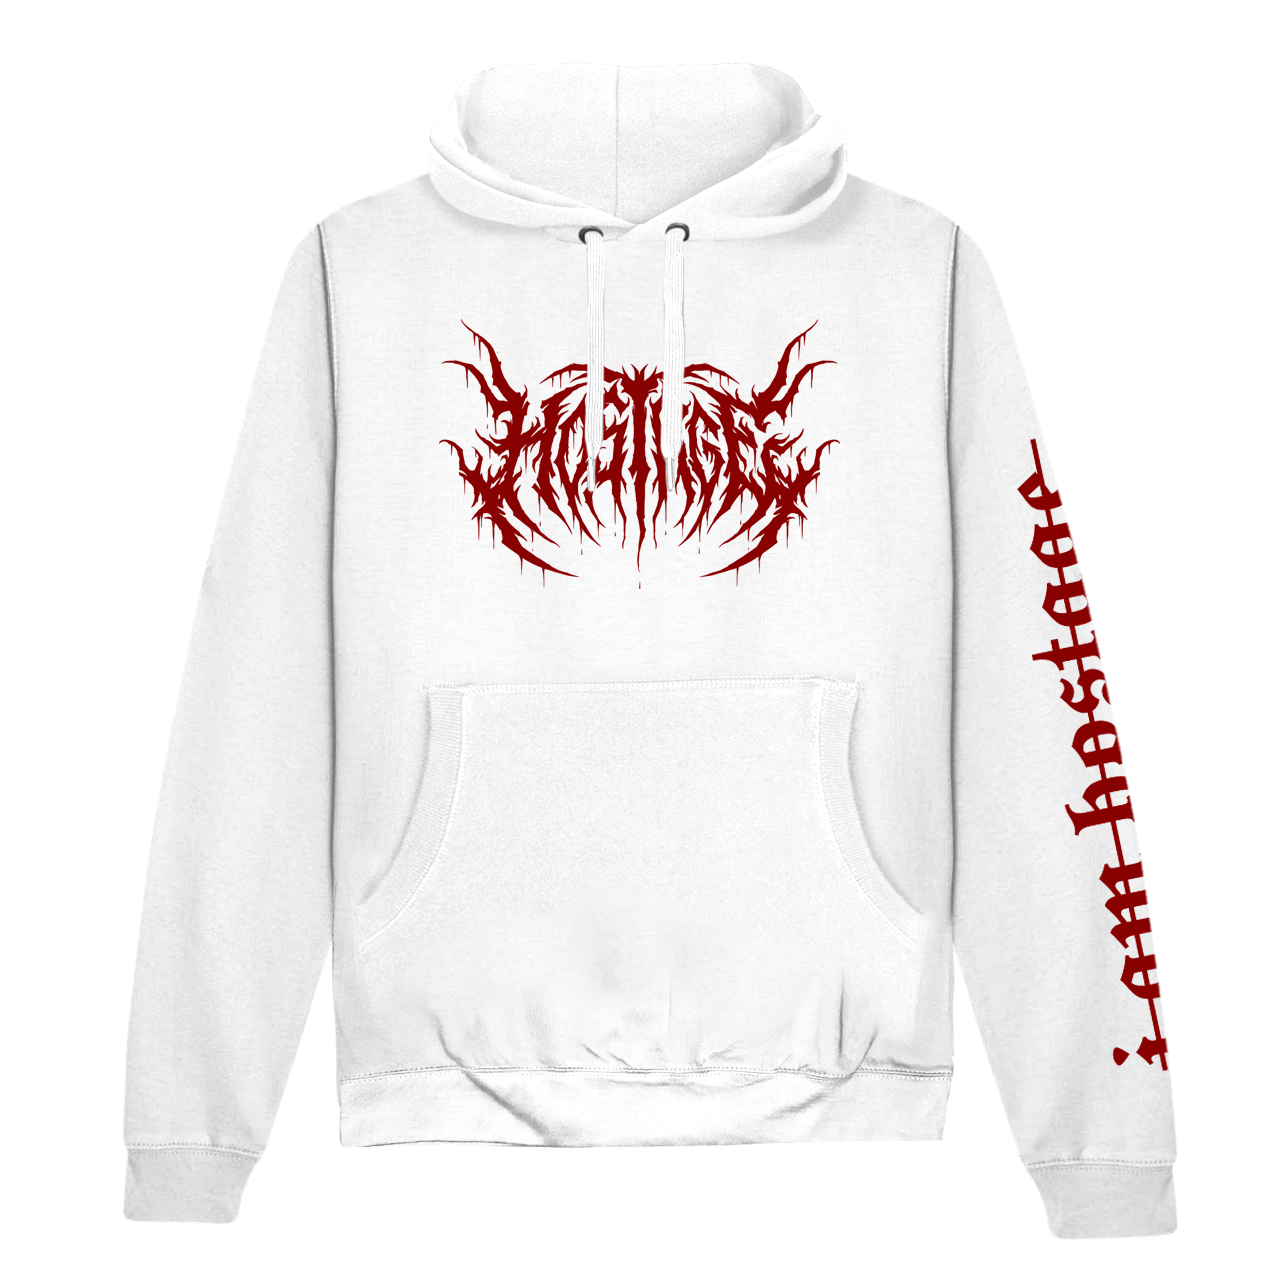 HOSTAGE Deathmetal White Hoodie Merchandise front